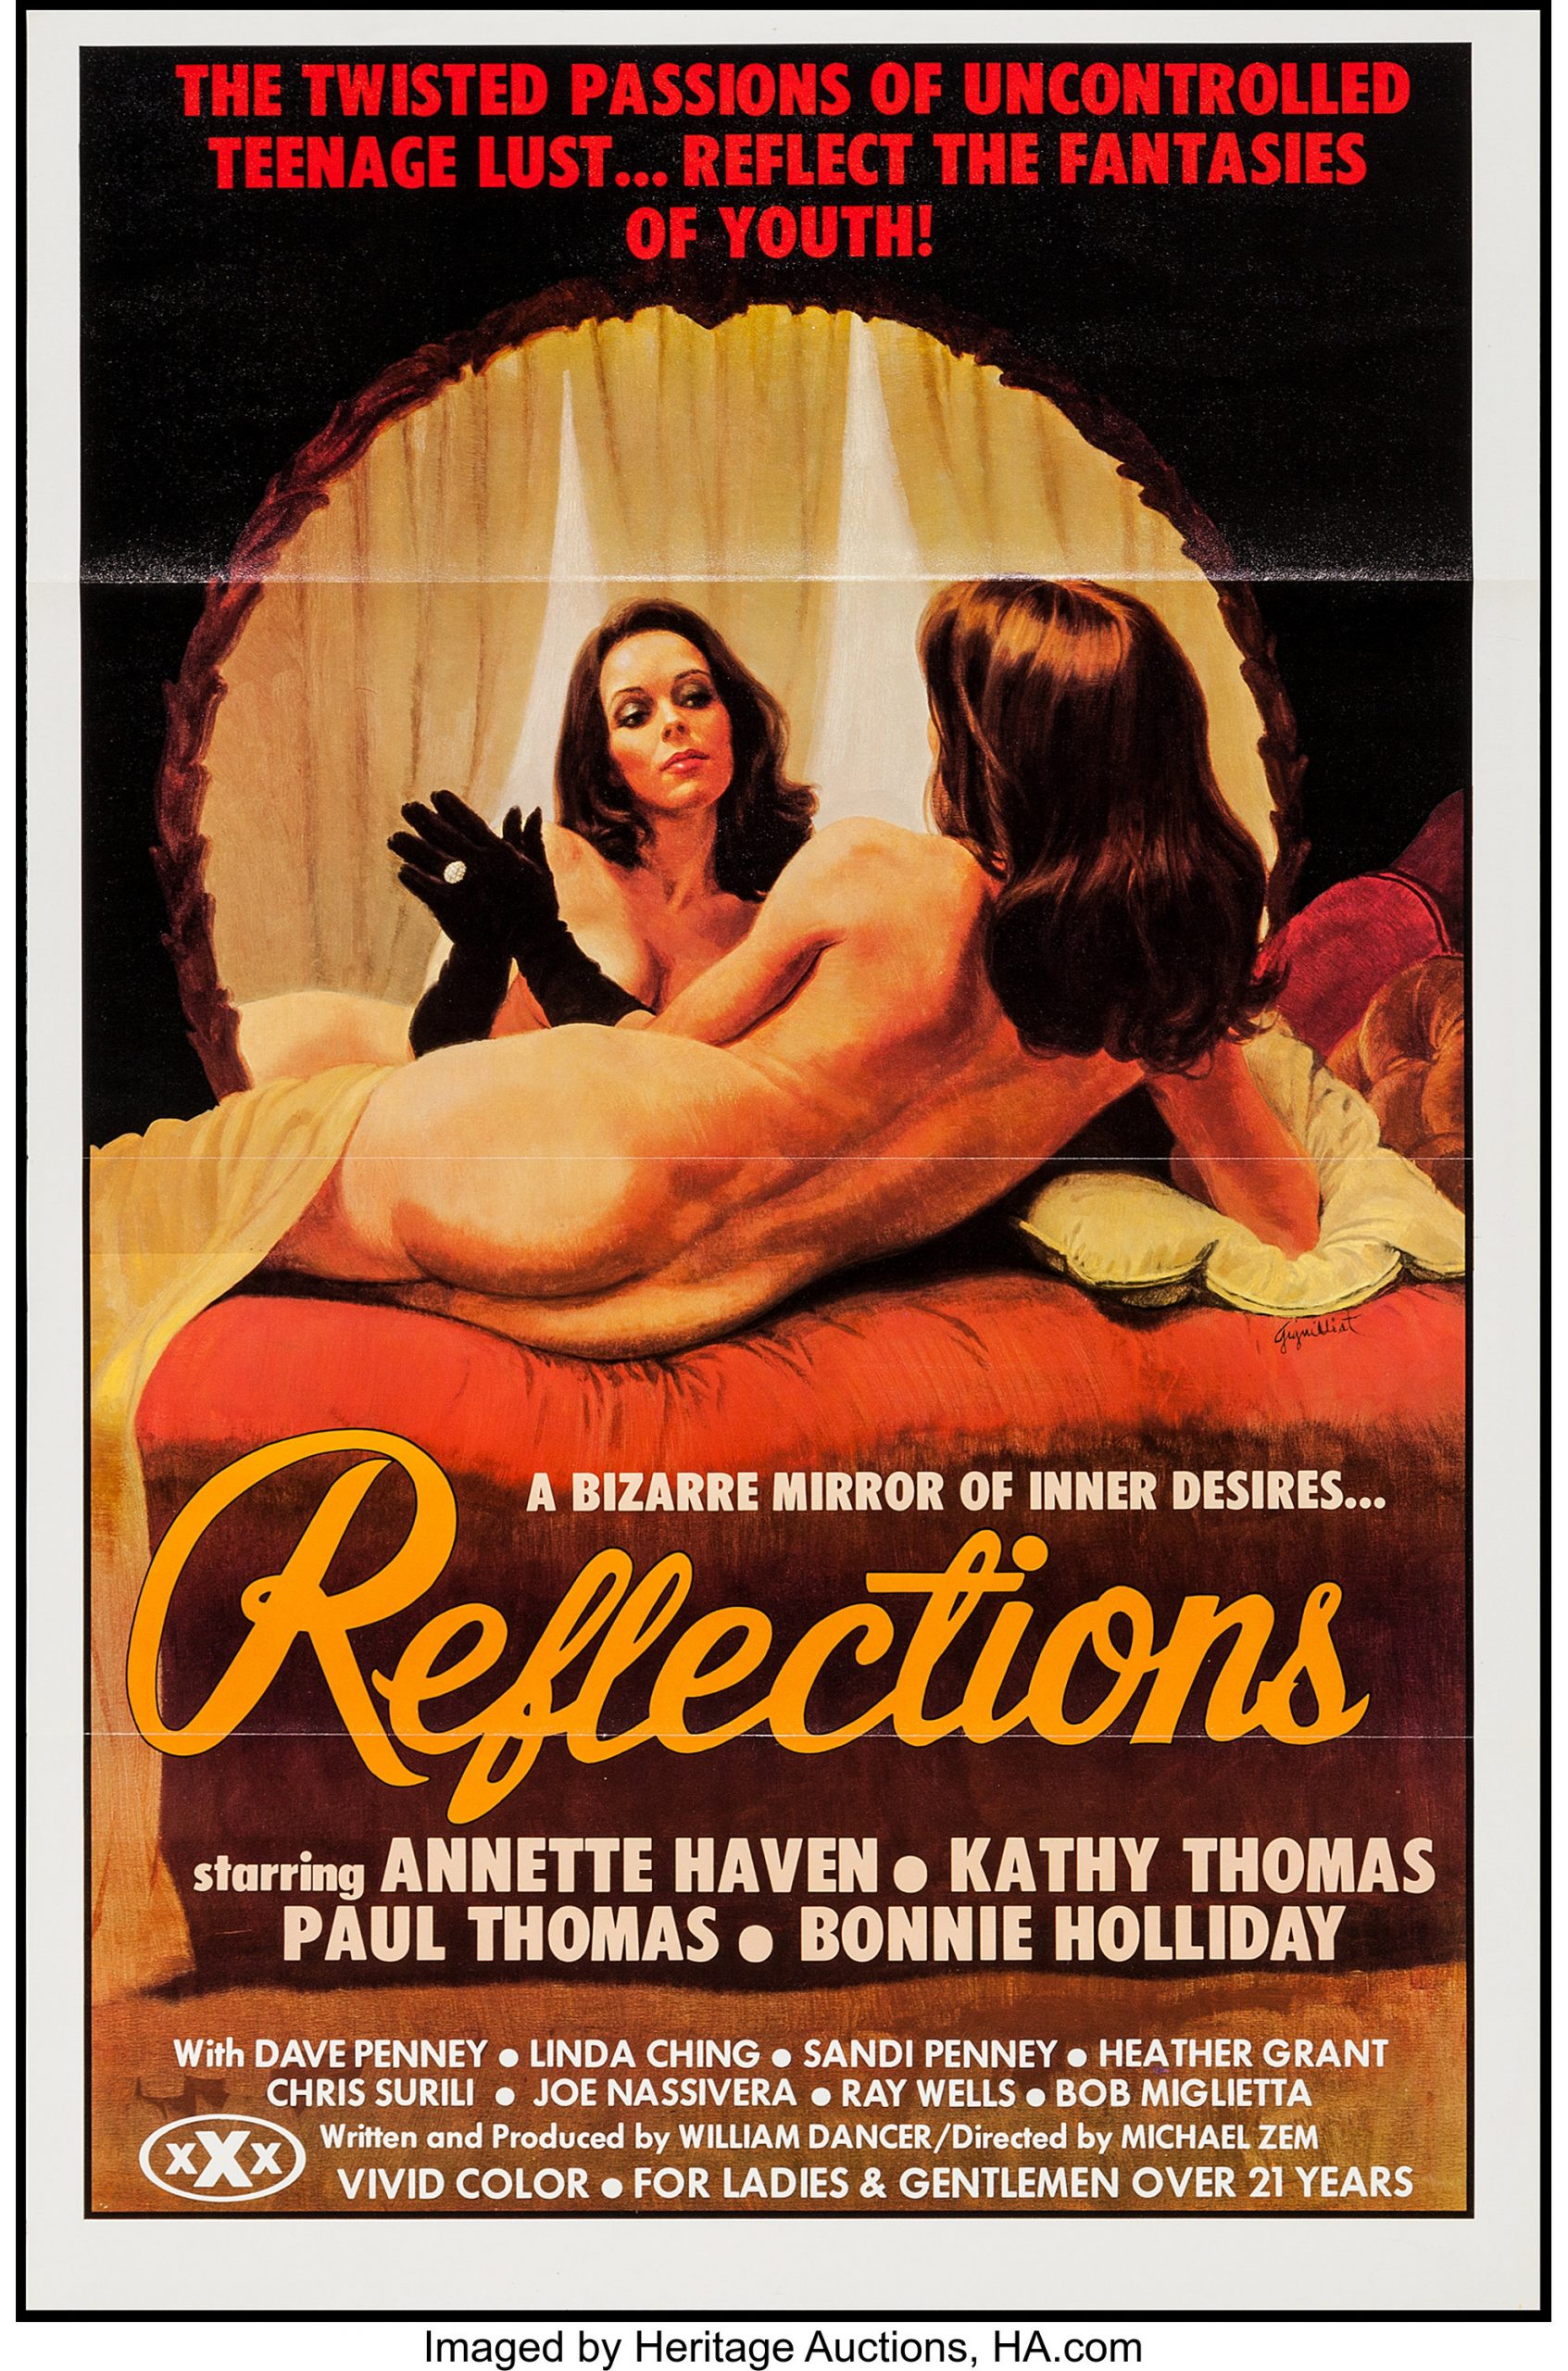 Reflections (1977) - Original Poster - vintagepornfun.com